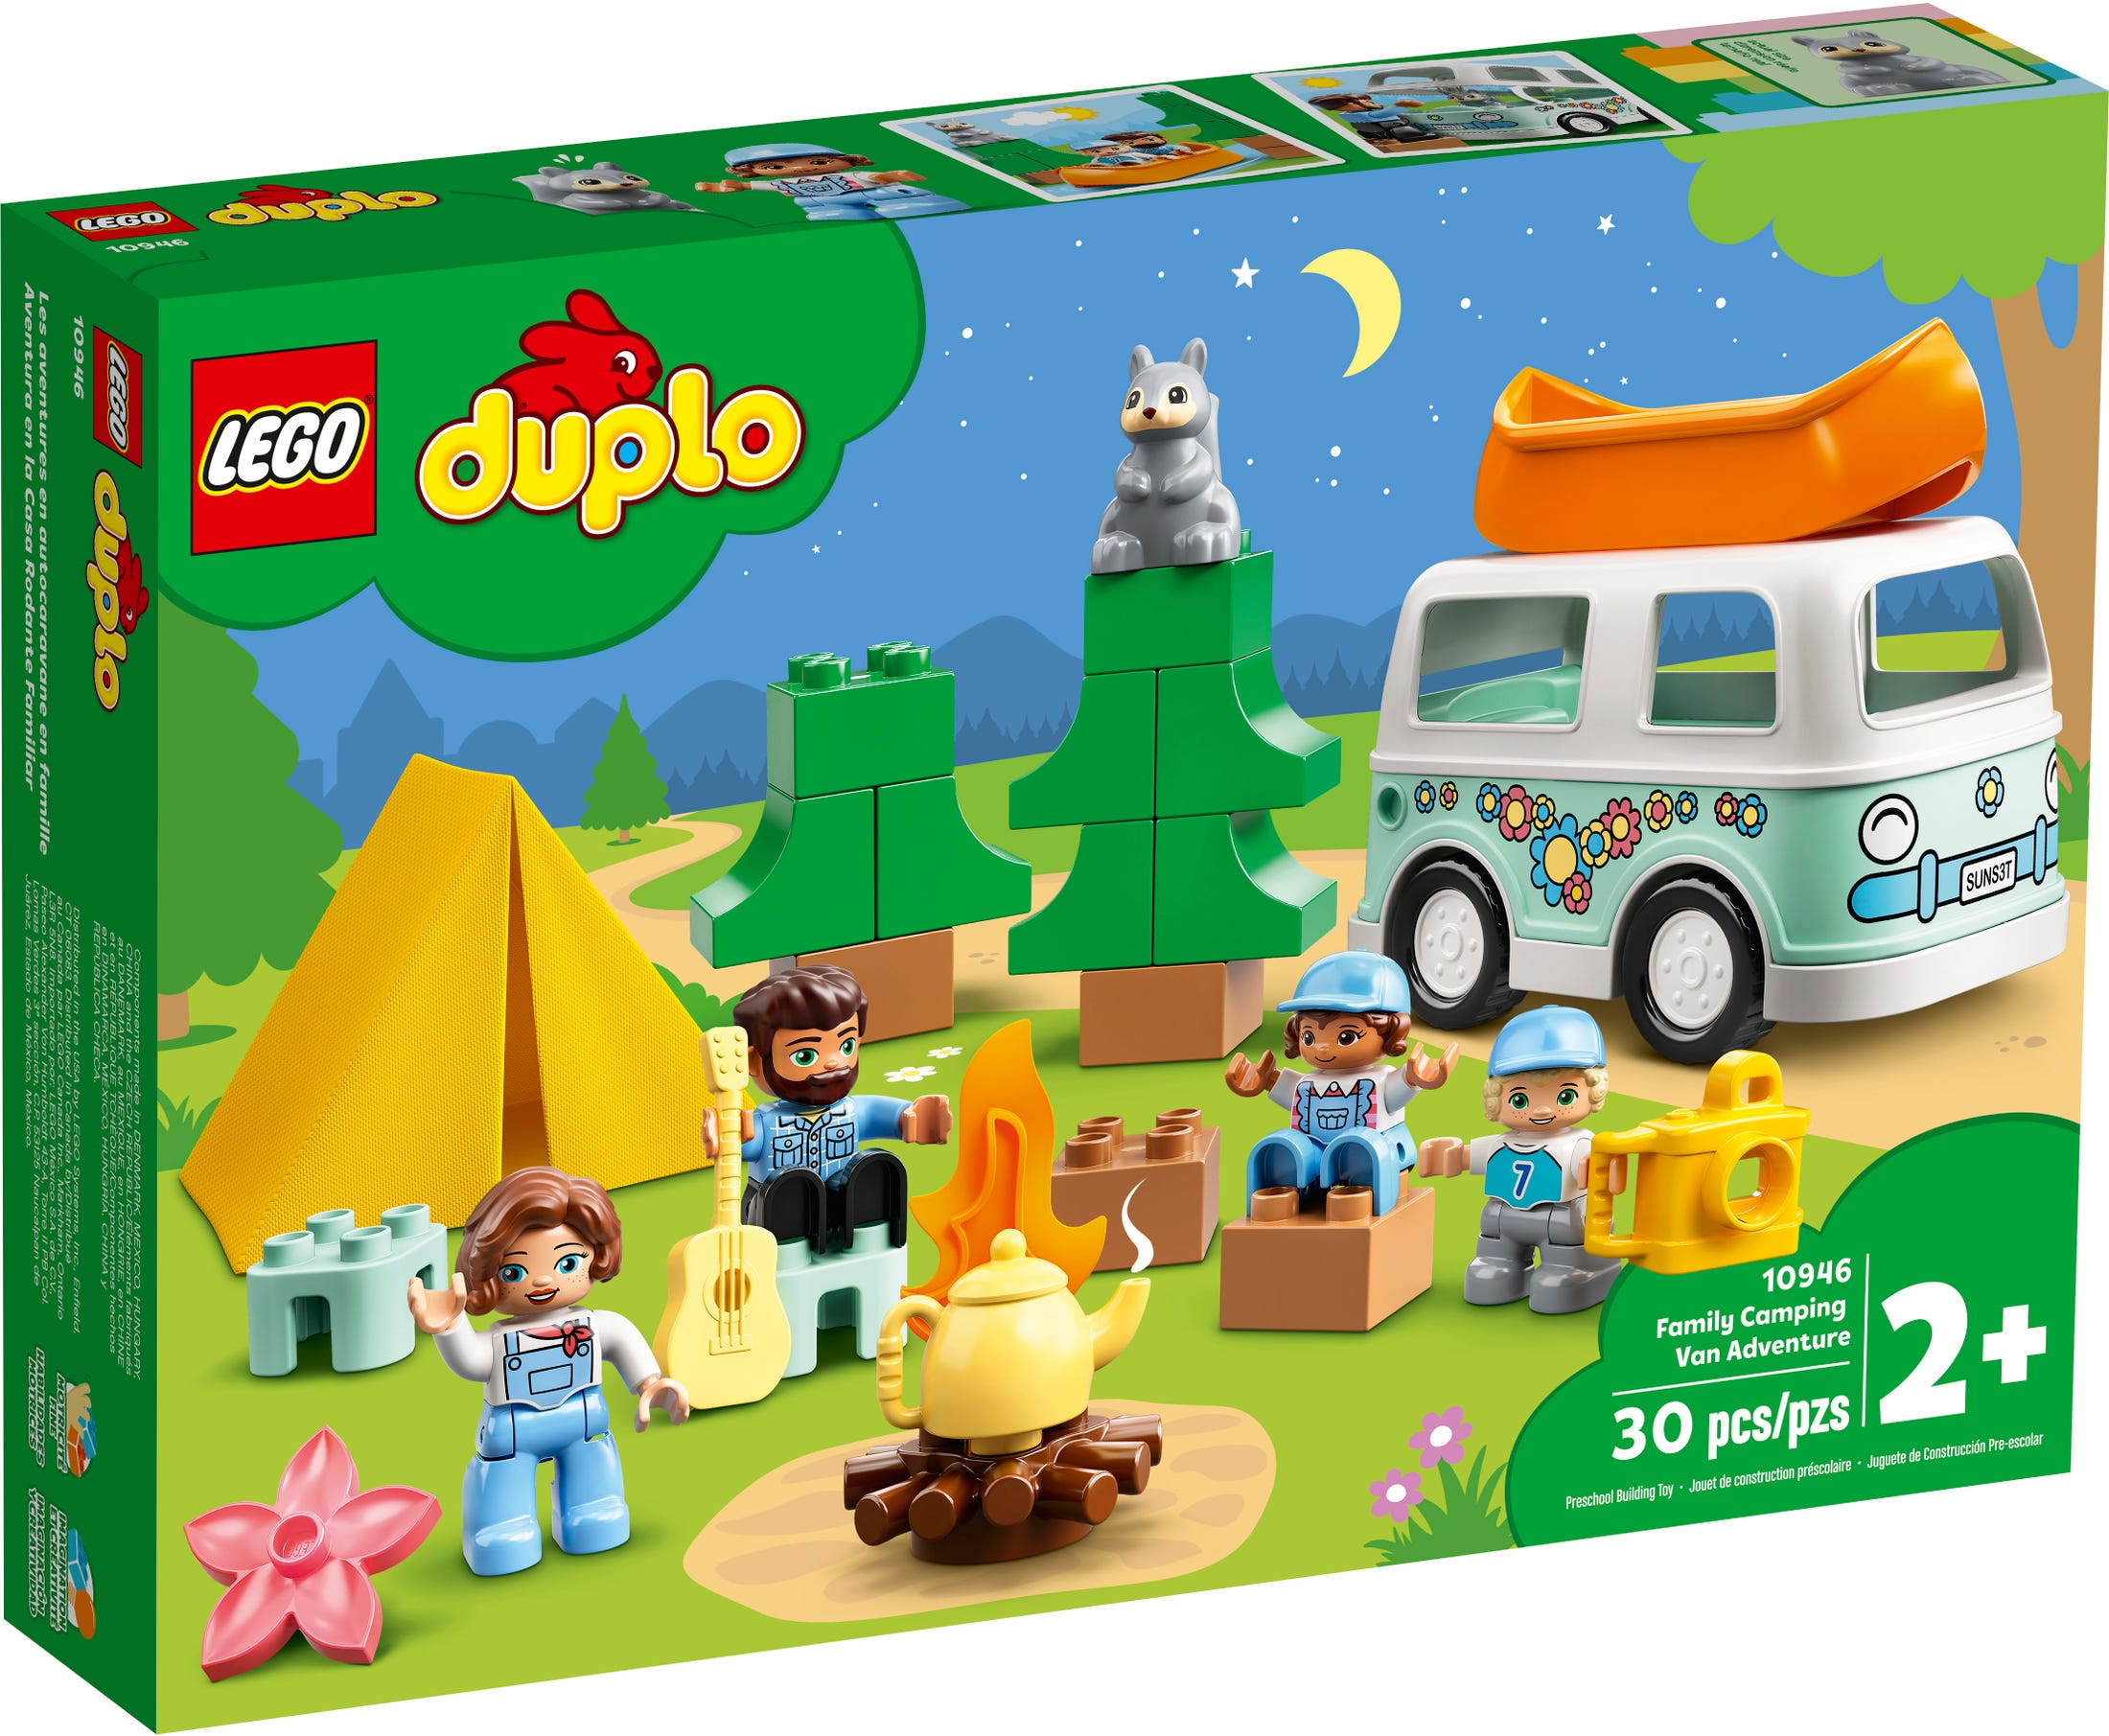 LEGO 10946 Family Camping Van Adventure - Duplo